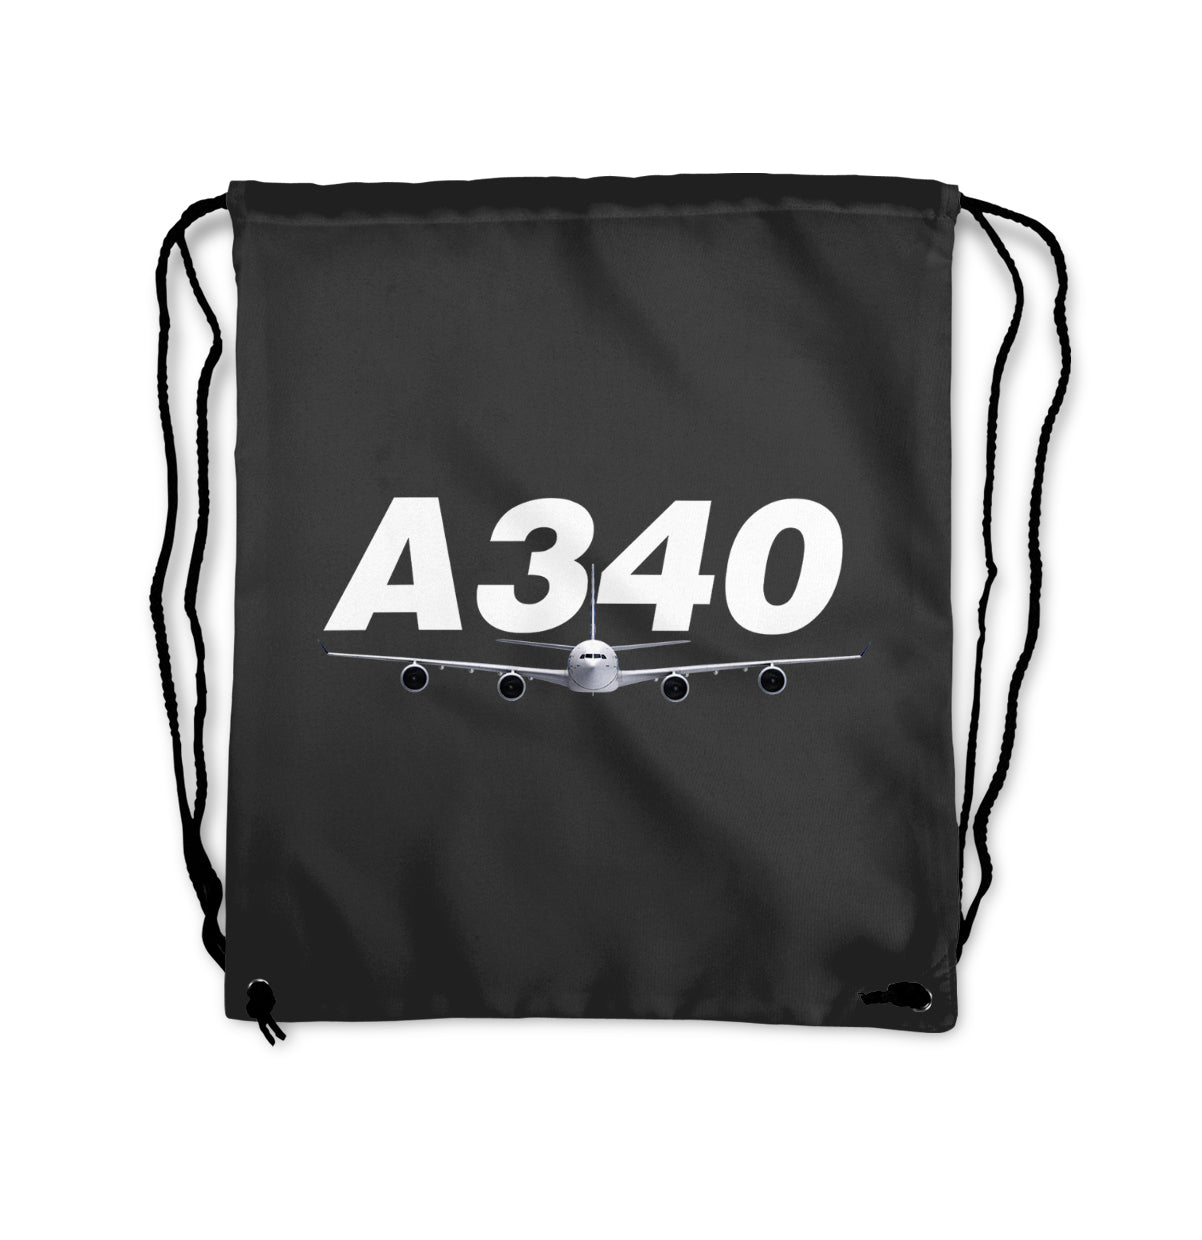 Super Airbus A340 Designed Drawstring Bags